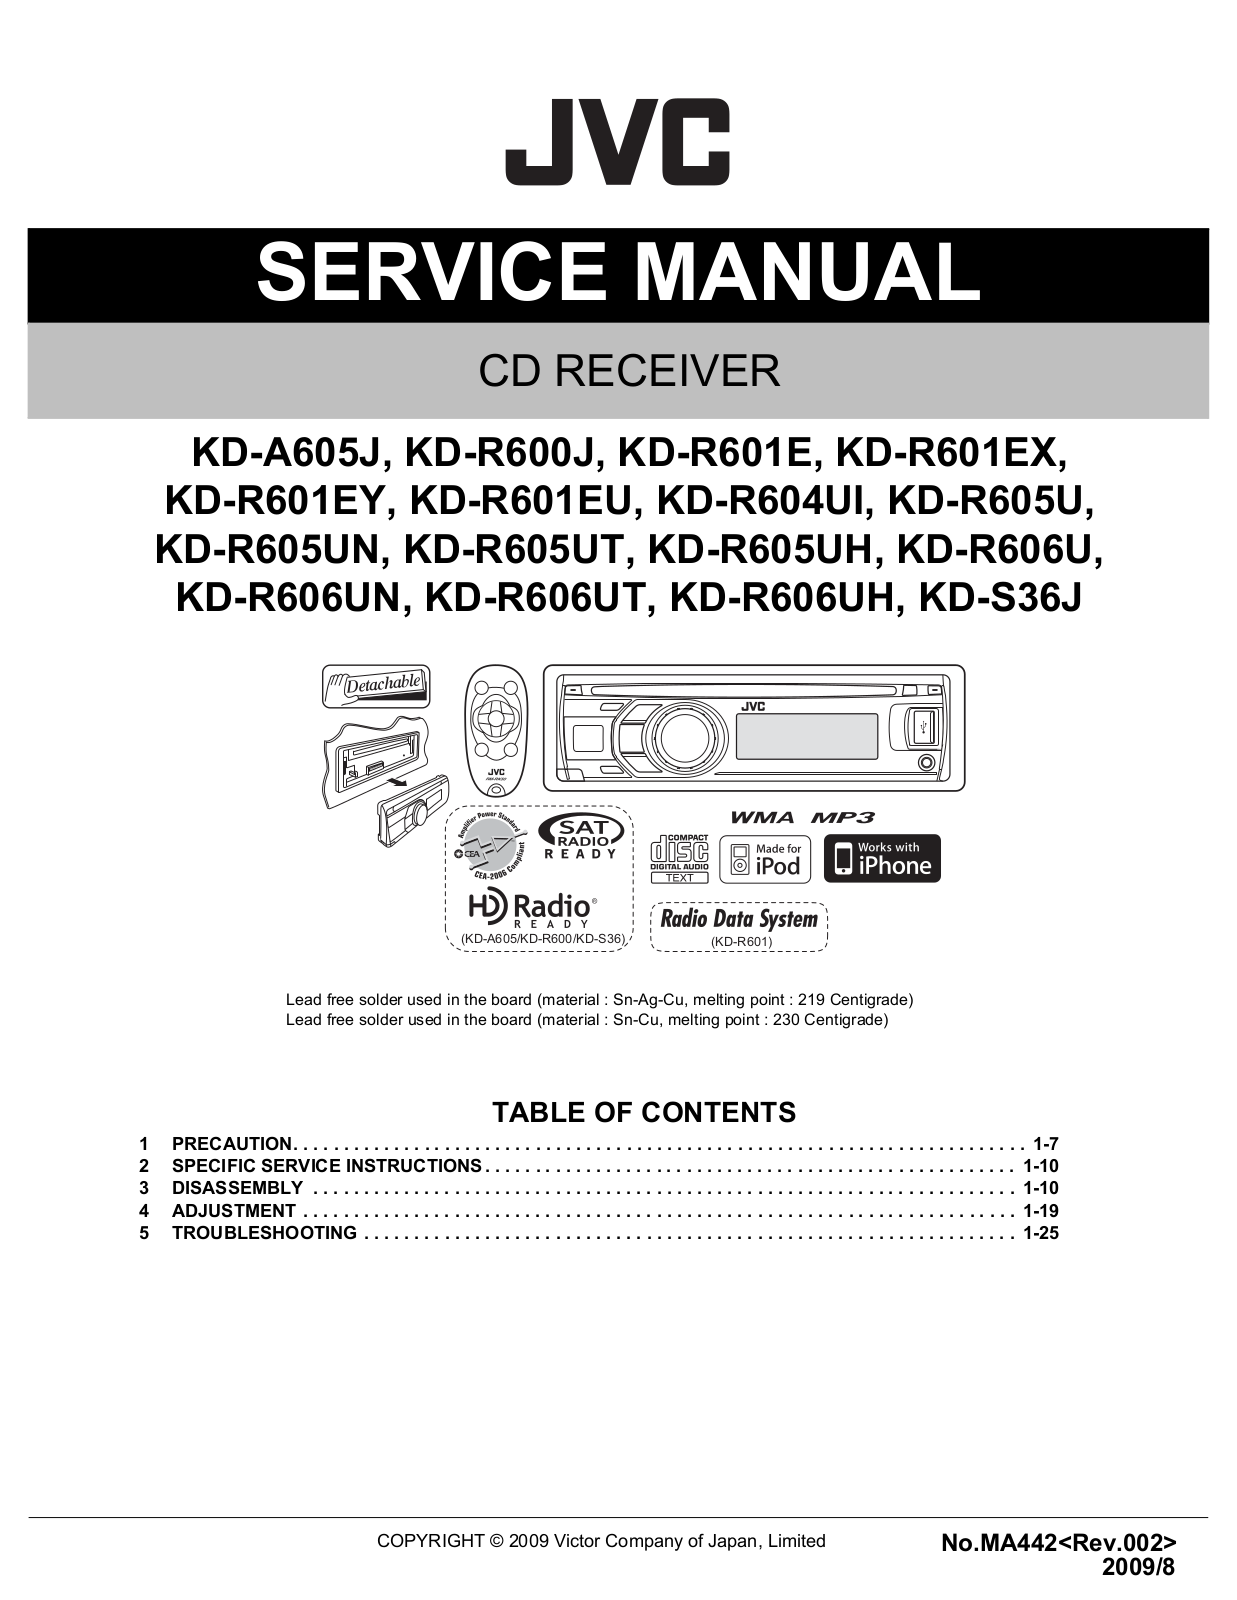 JVC KD-A605J, KD-R600J, KD-R601E, KD-R601EX, KD-R601EY Service Manual